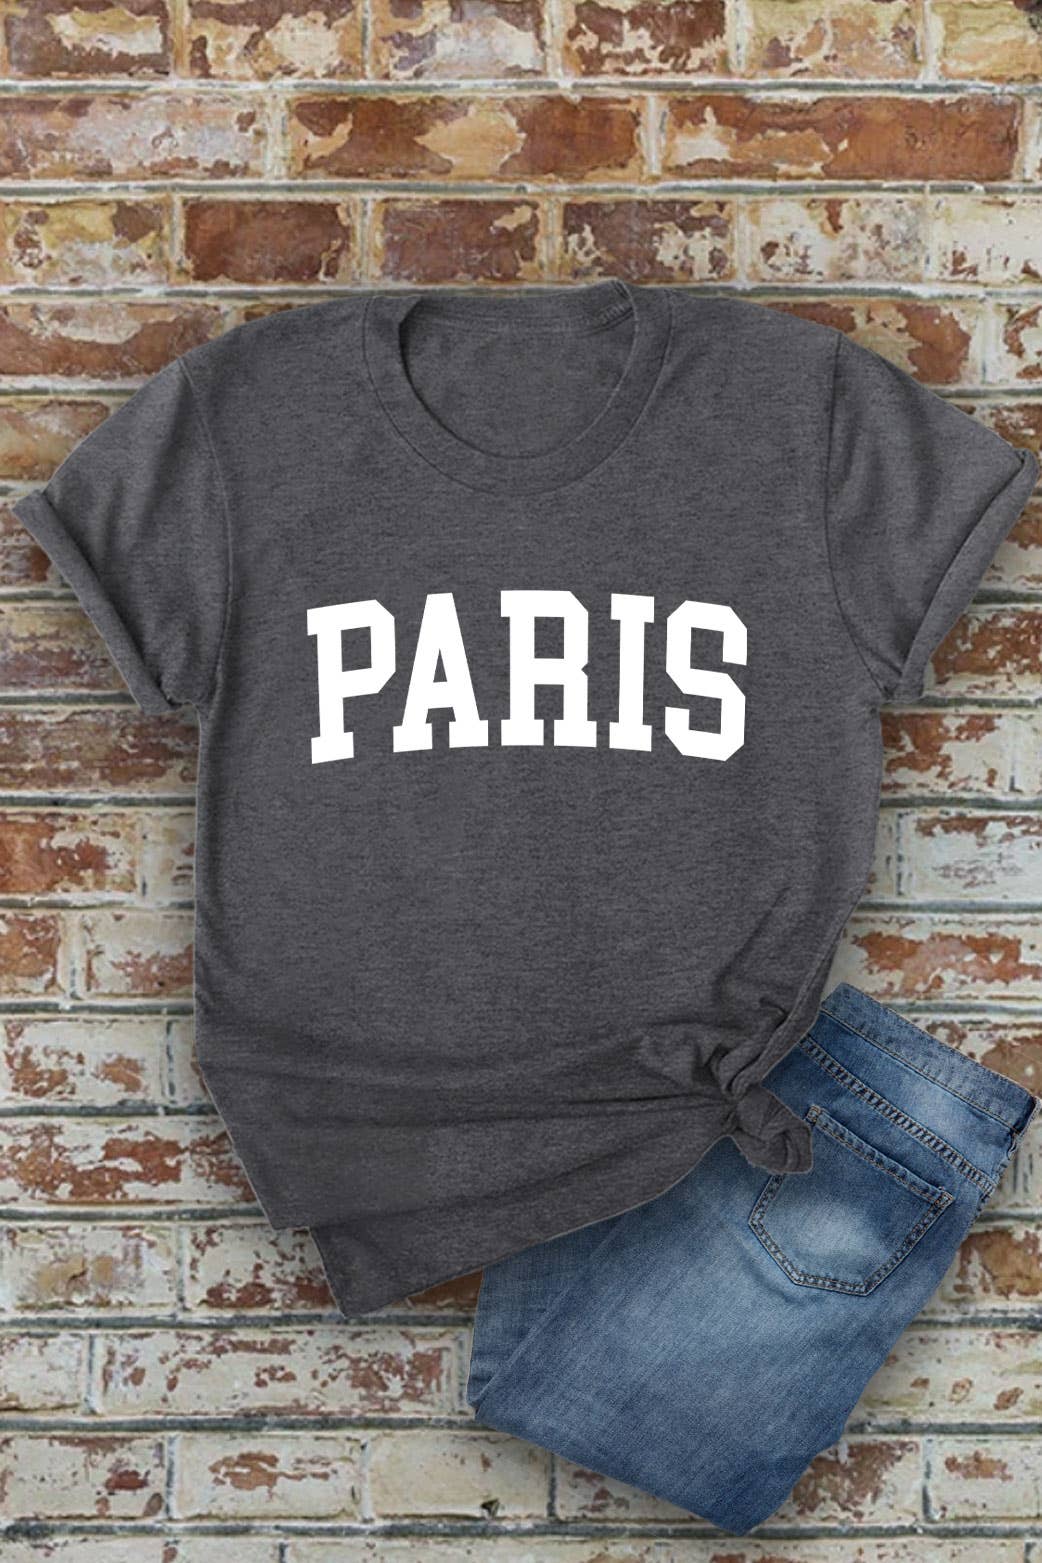 Paris, Unisex Round Neck Short Sleeve T-Shirt: S / Sand